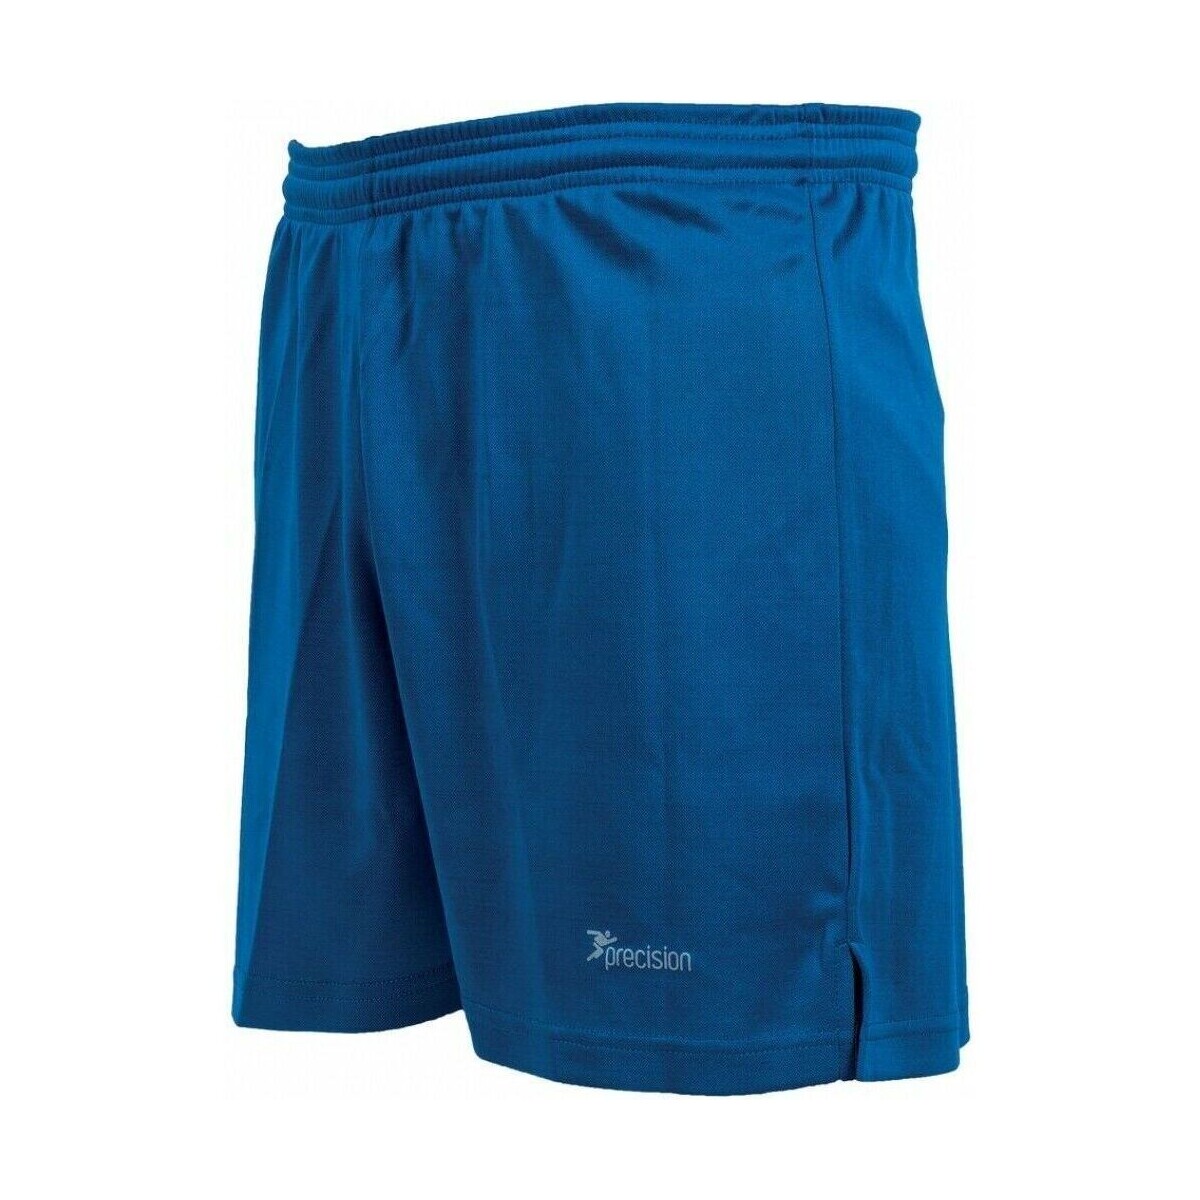 textil Shorts / Bermudas Precision Madrid Azul